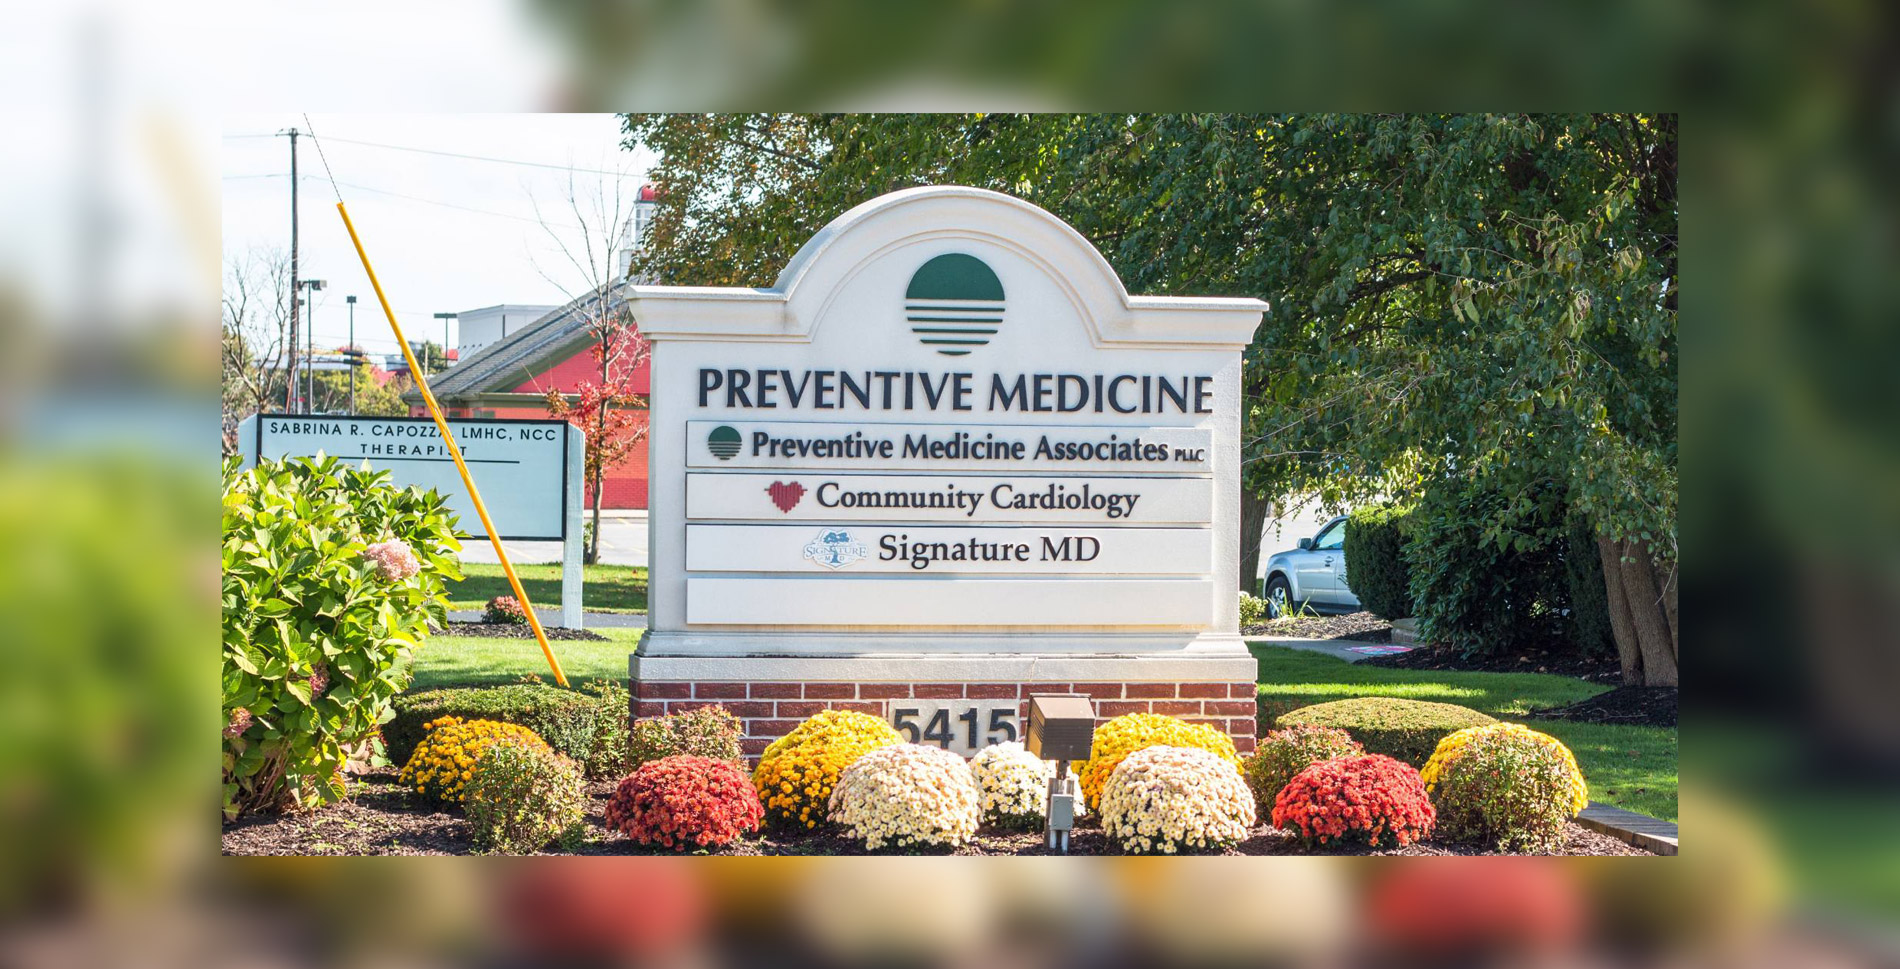 Preventive Medicine Associates, PLLC